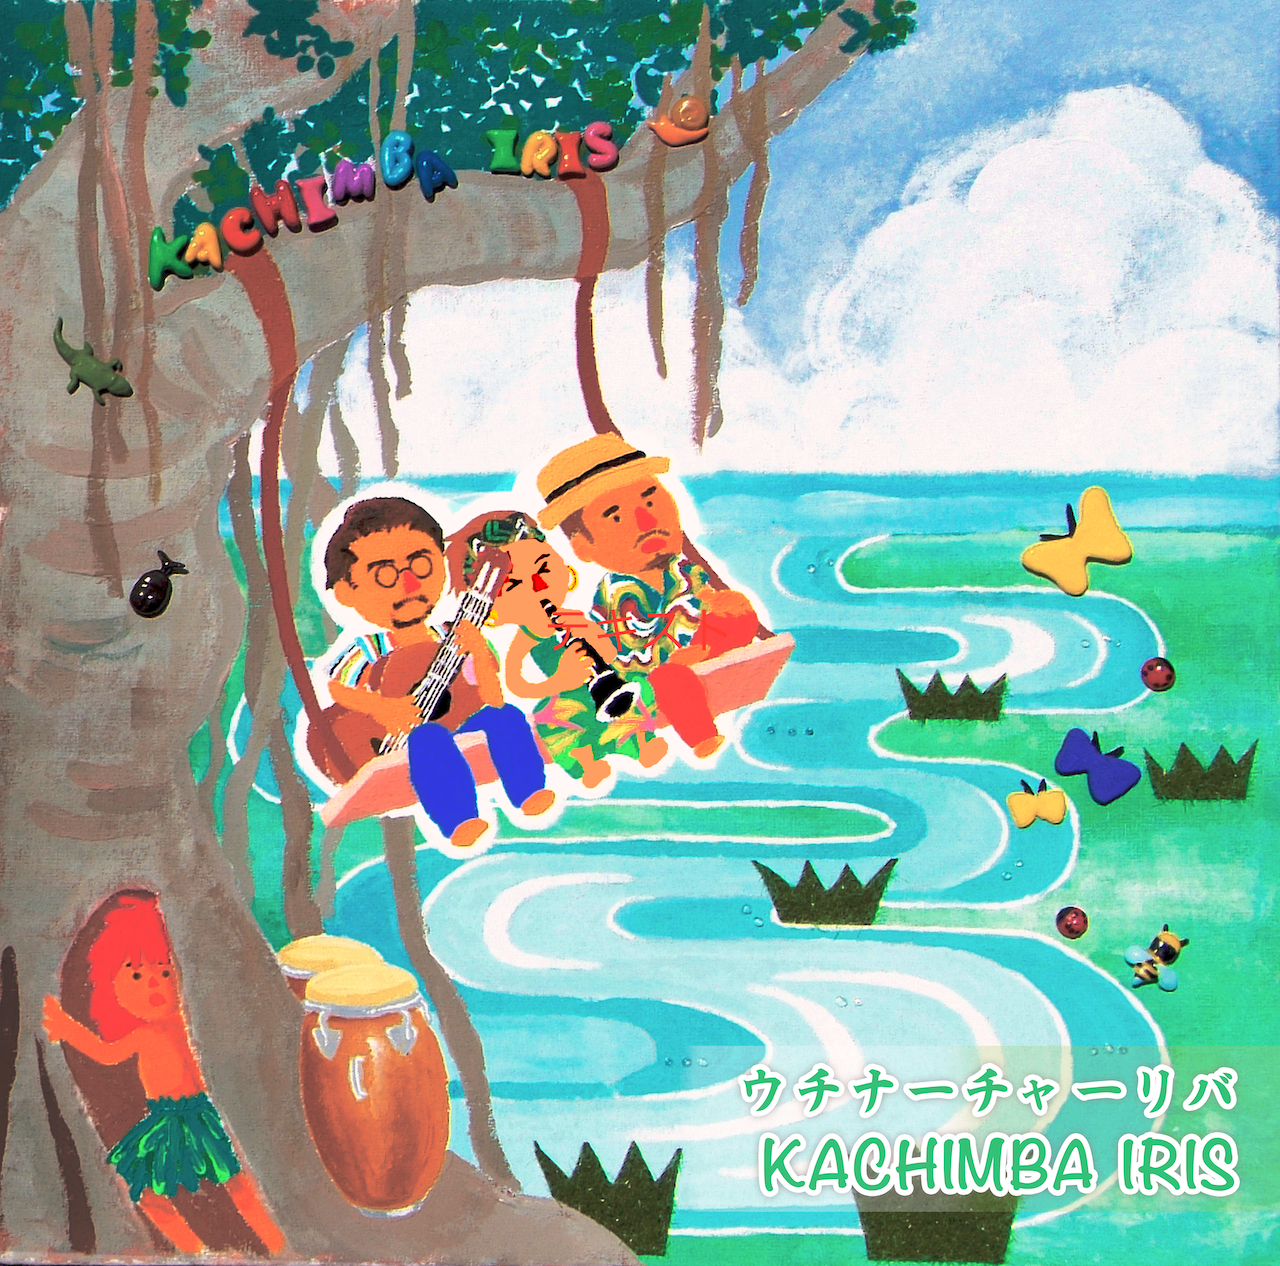 KACHIMBA4   Album｢ハチャーガマク｣(Hacha-gamaku)